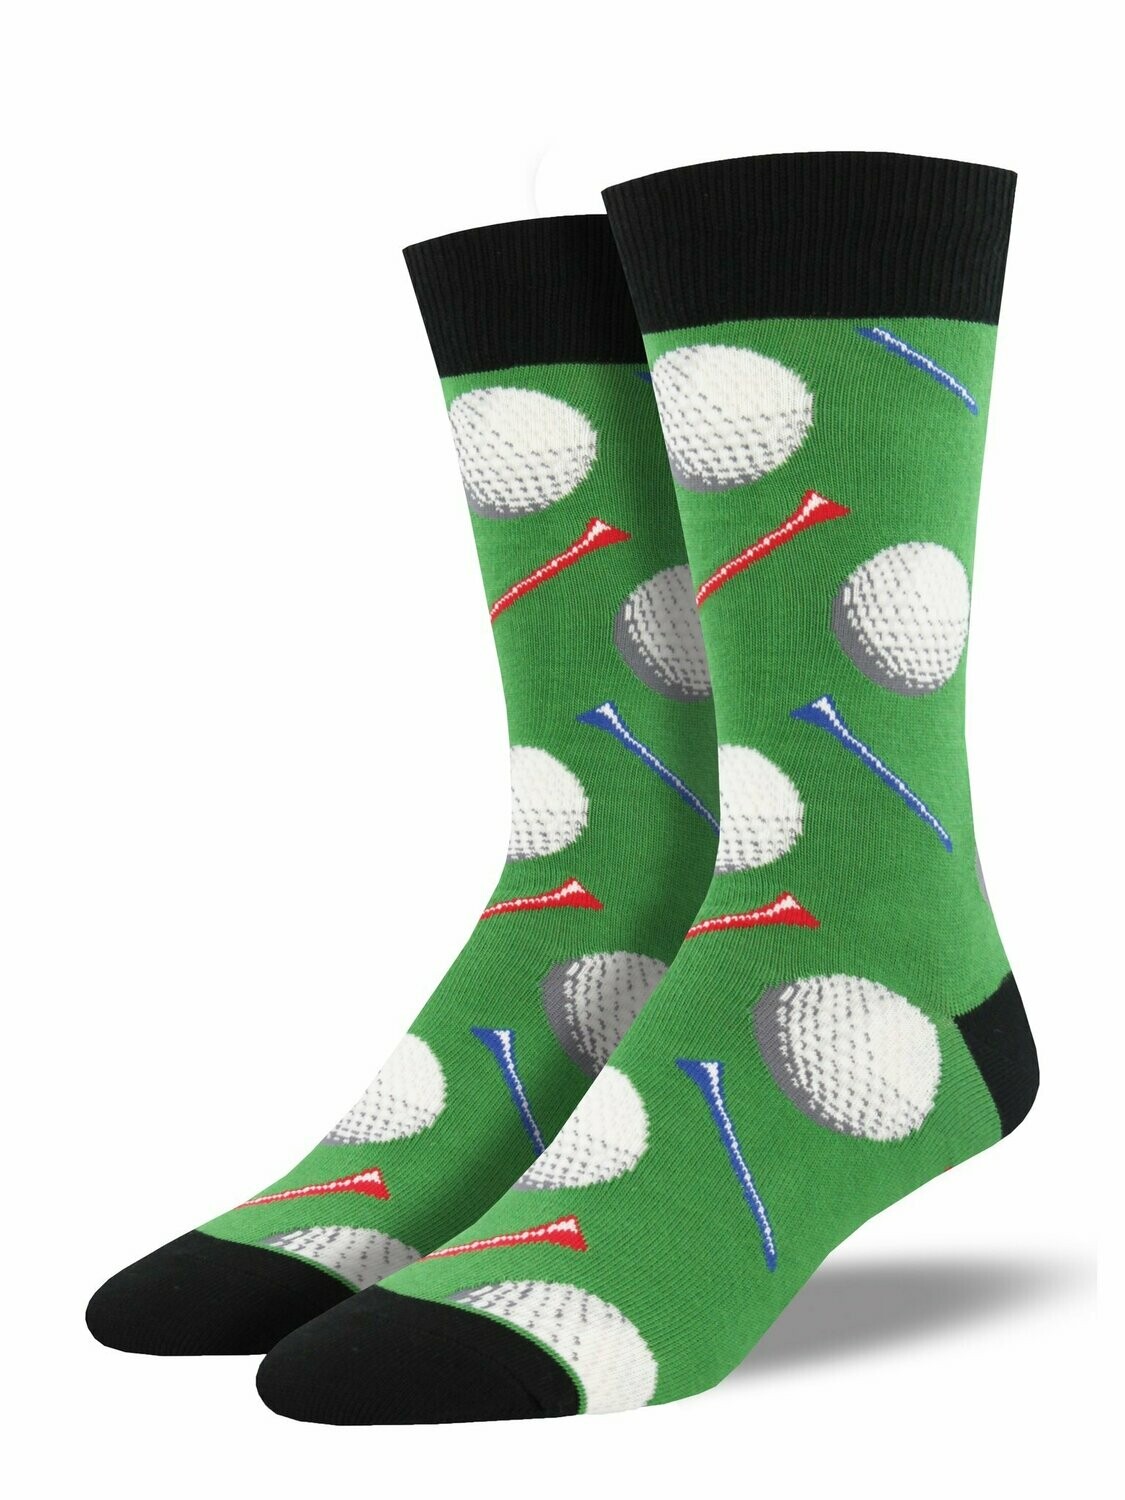 Tee It Up Green - Men's Socks